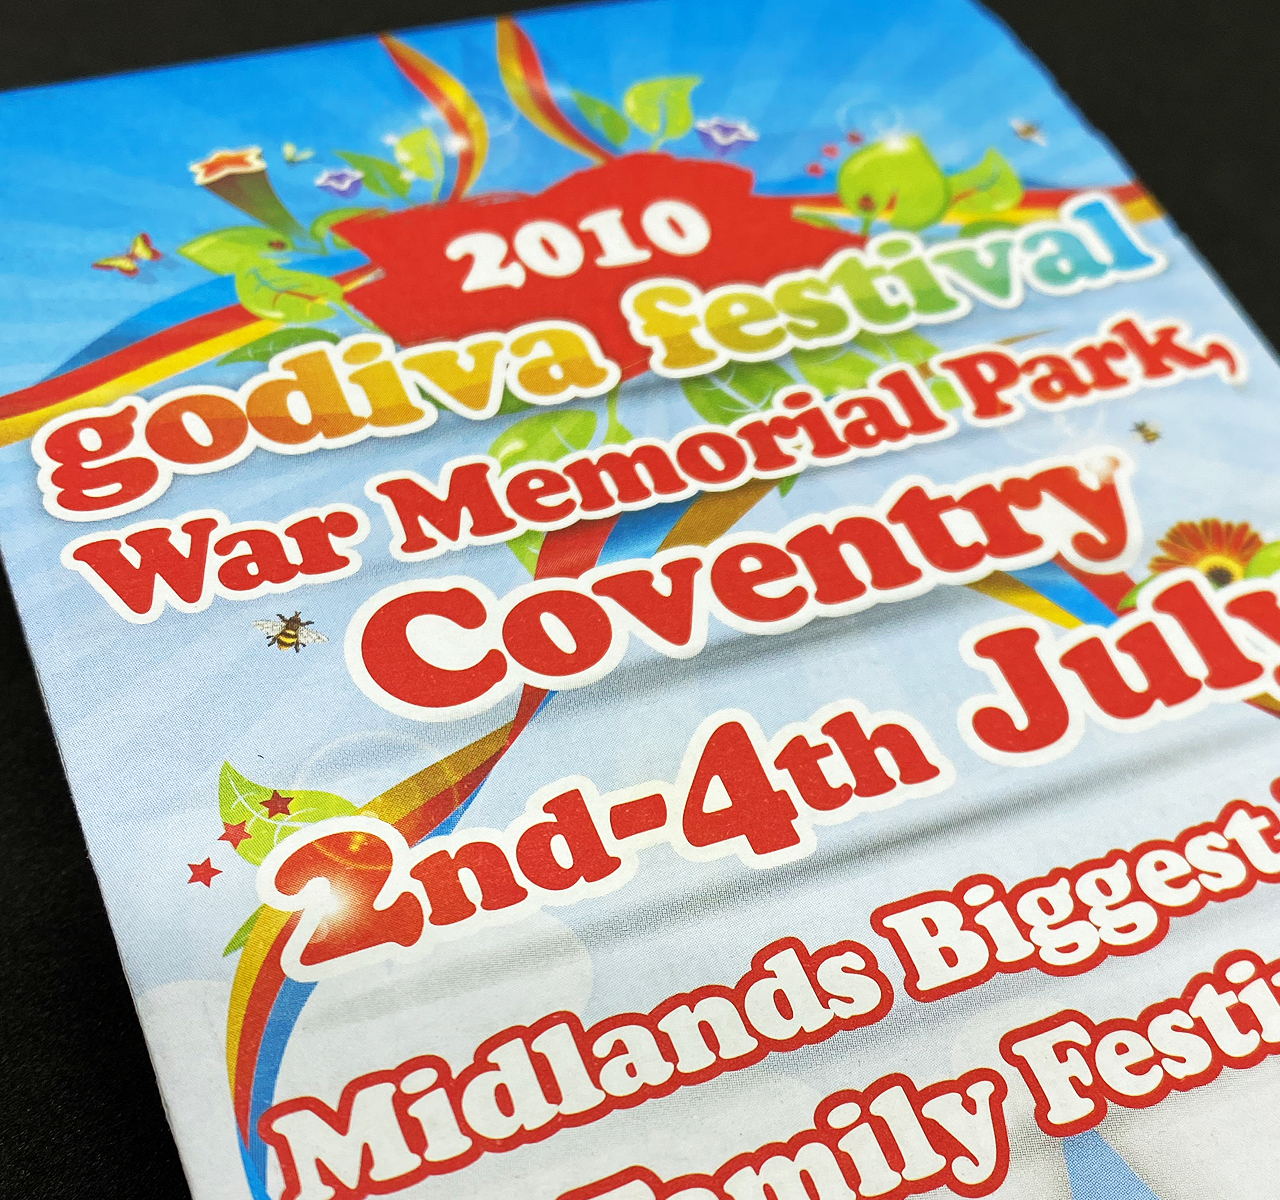 Godiva Festival Coventry printed event guide Illustration design, Designed by Nonfacture Birmingham design studio